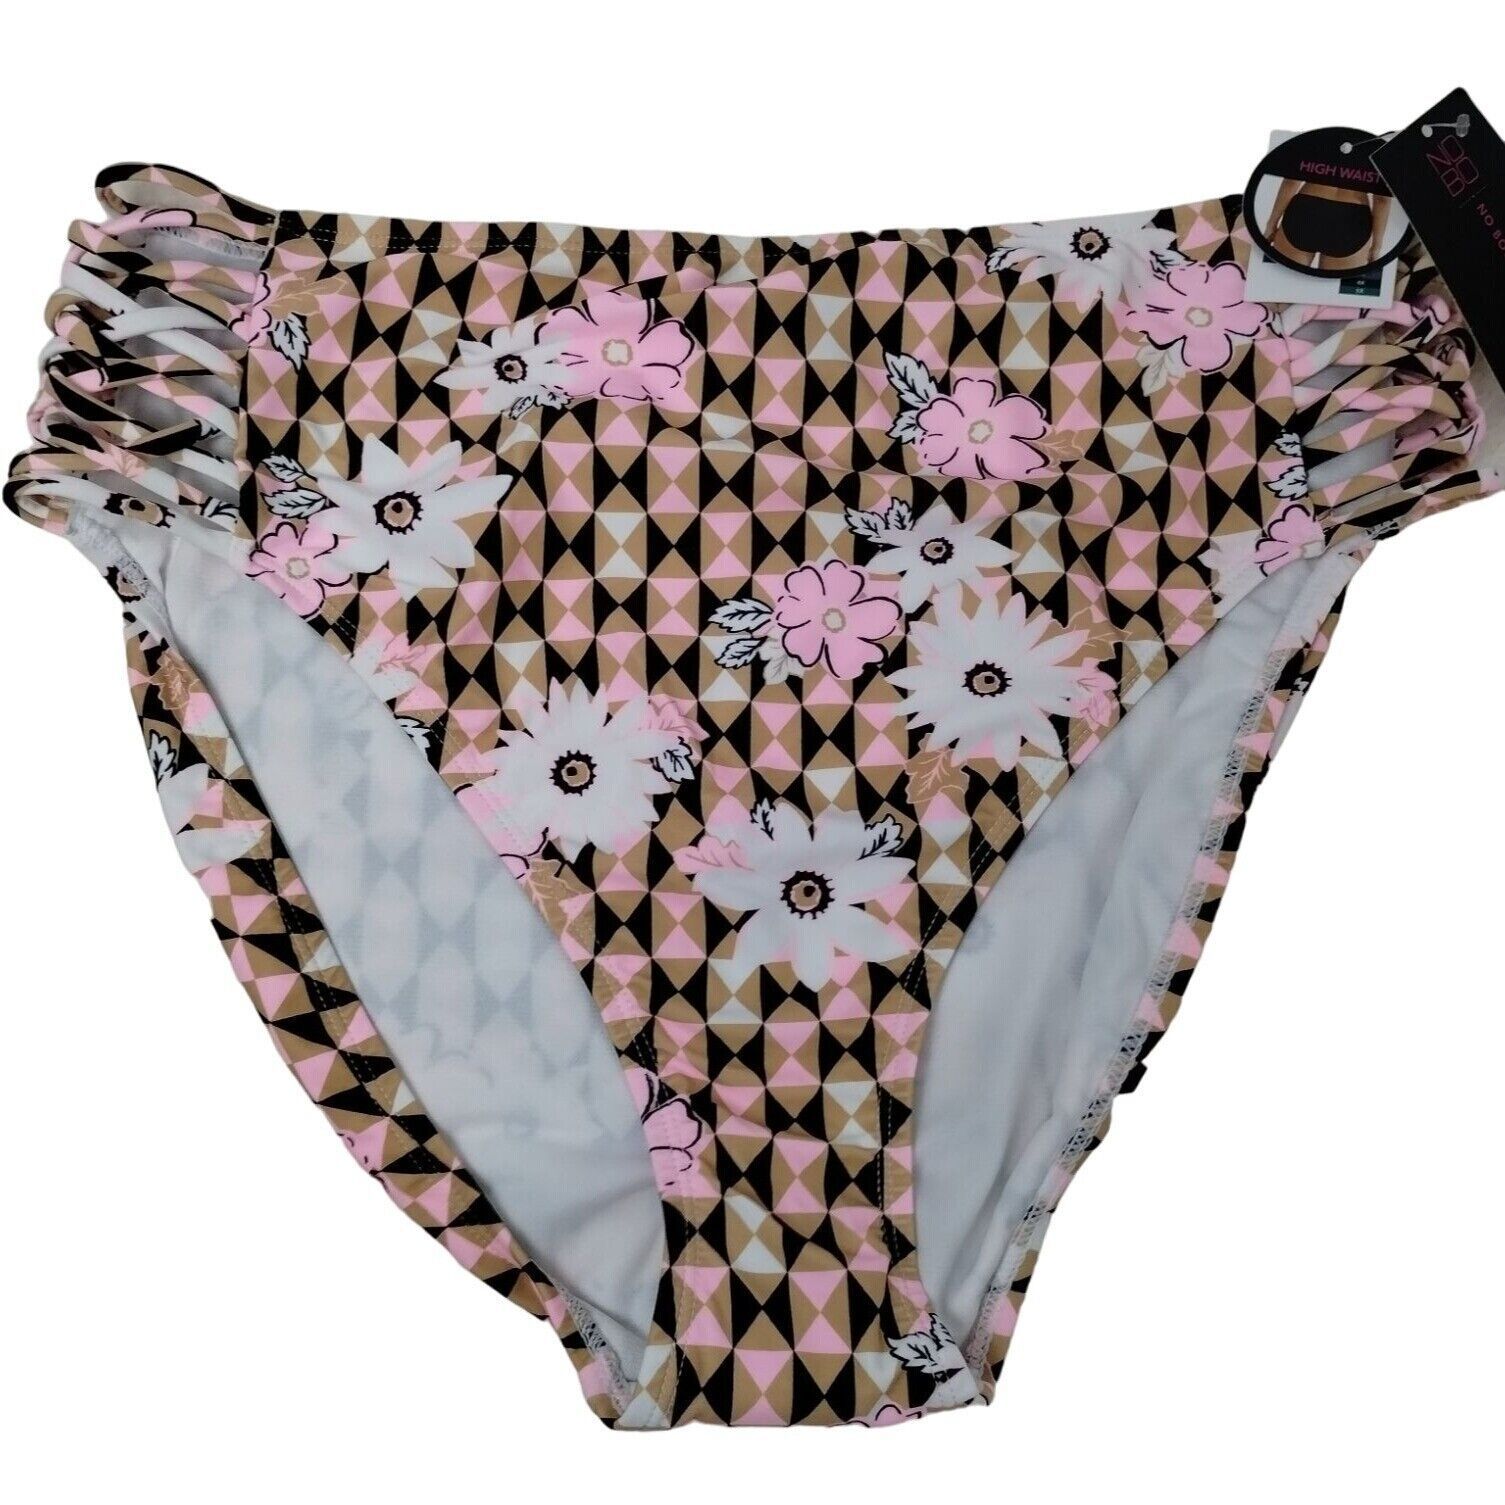 Primary image for No Boundaries Junior Girls XL Daisy Floral High Waist Lattice Side Bikini Bottom